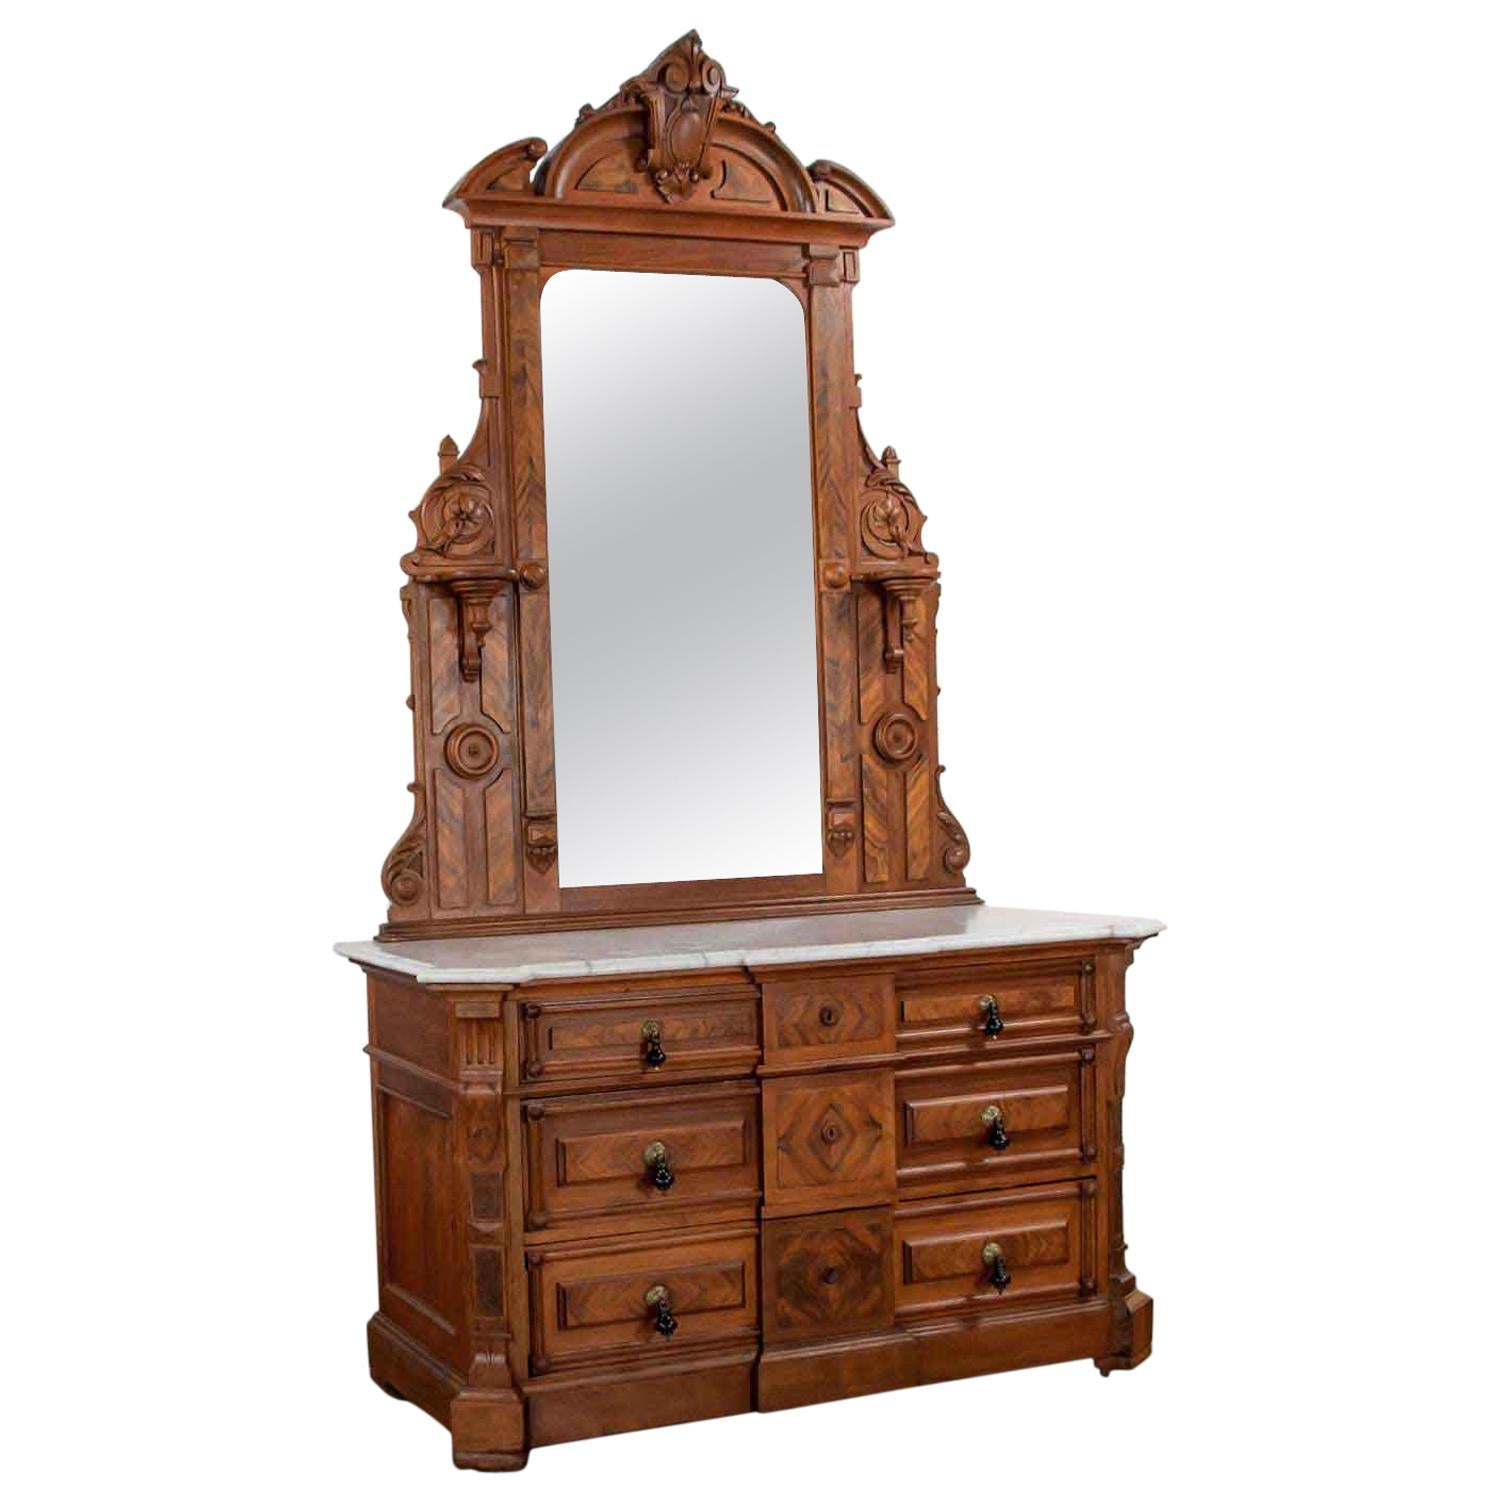 Antique Victorian Mirrored Dresser in Walnut & Burl Walnut with White Marble Top For Sale